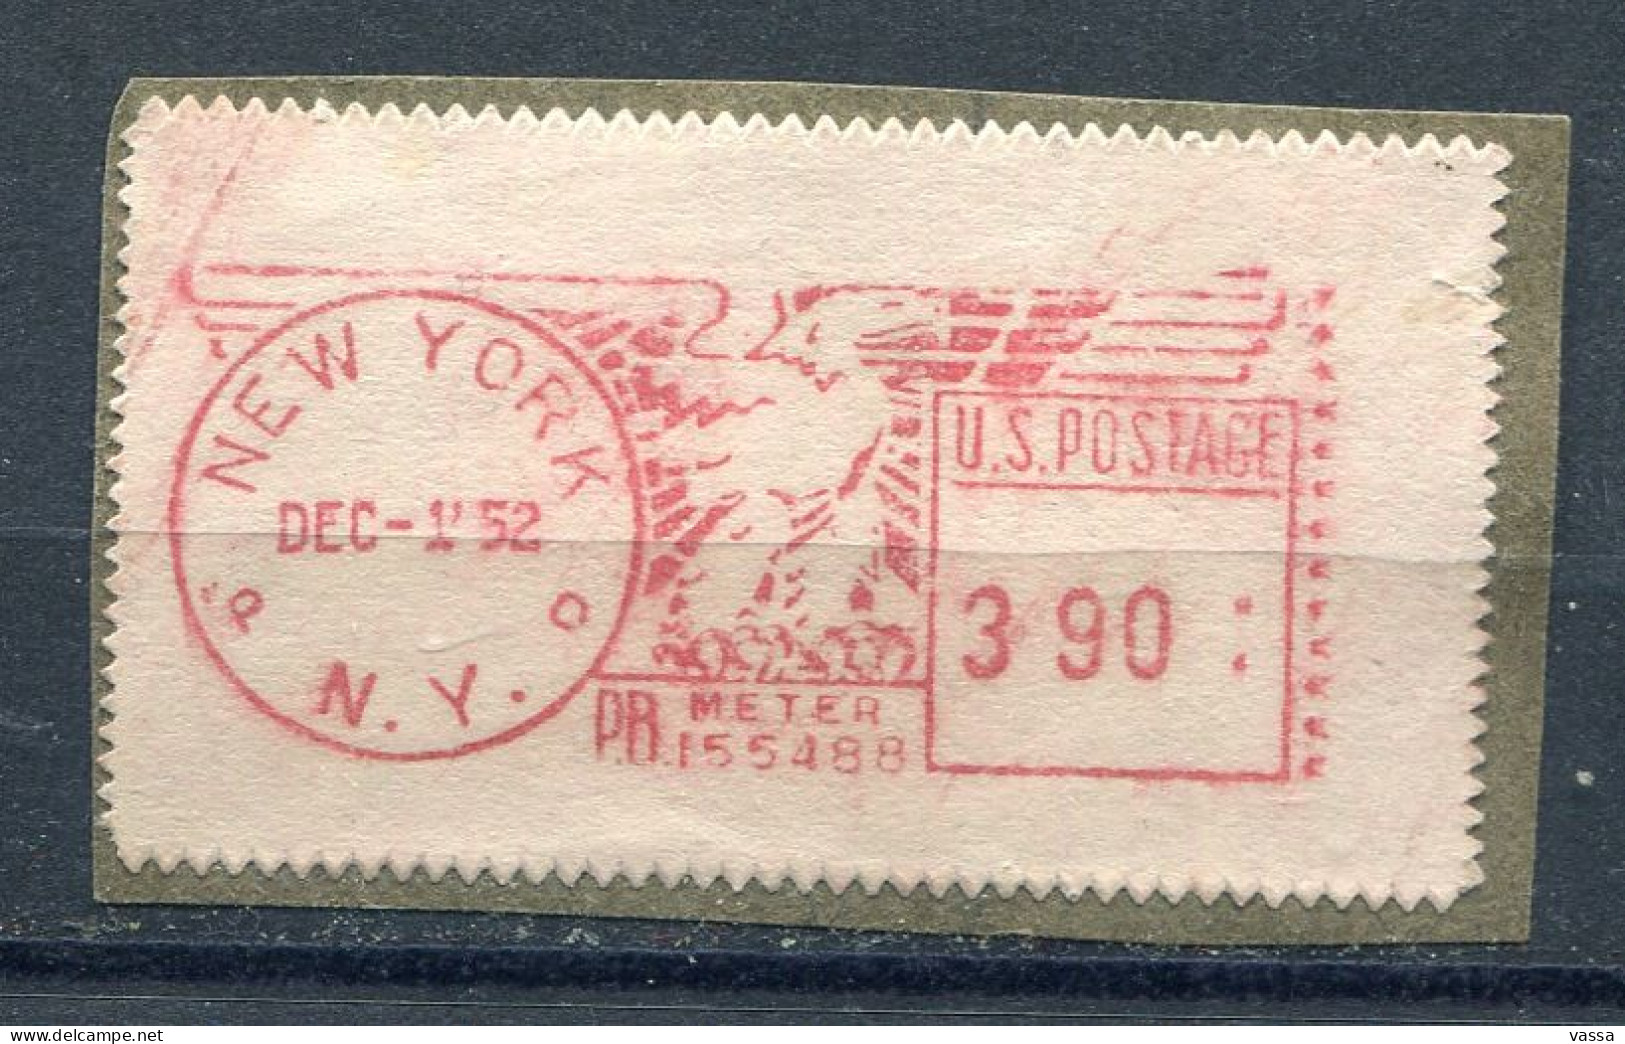 USA -1952 - PB Meter N°155488 PB - New-York  / Fragment- Aigle - Oblitérés